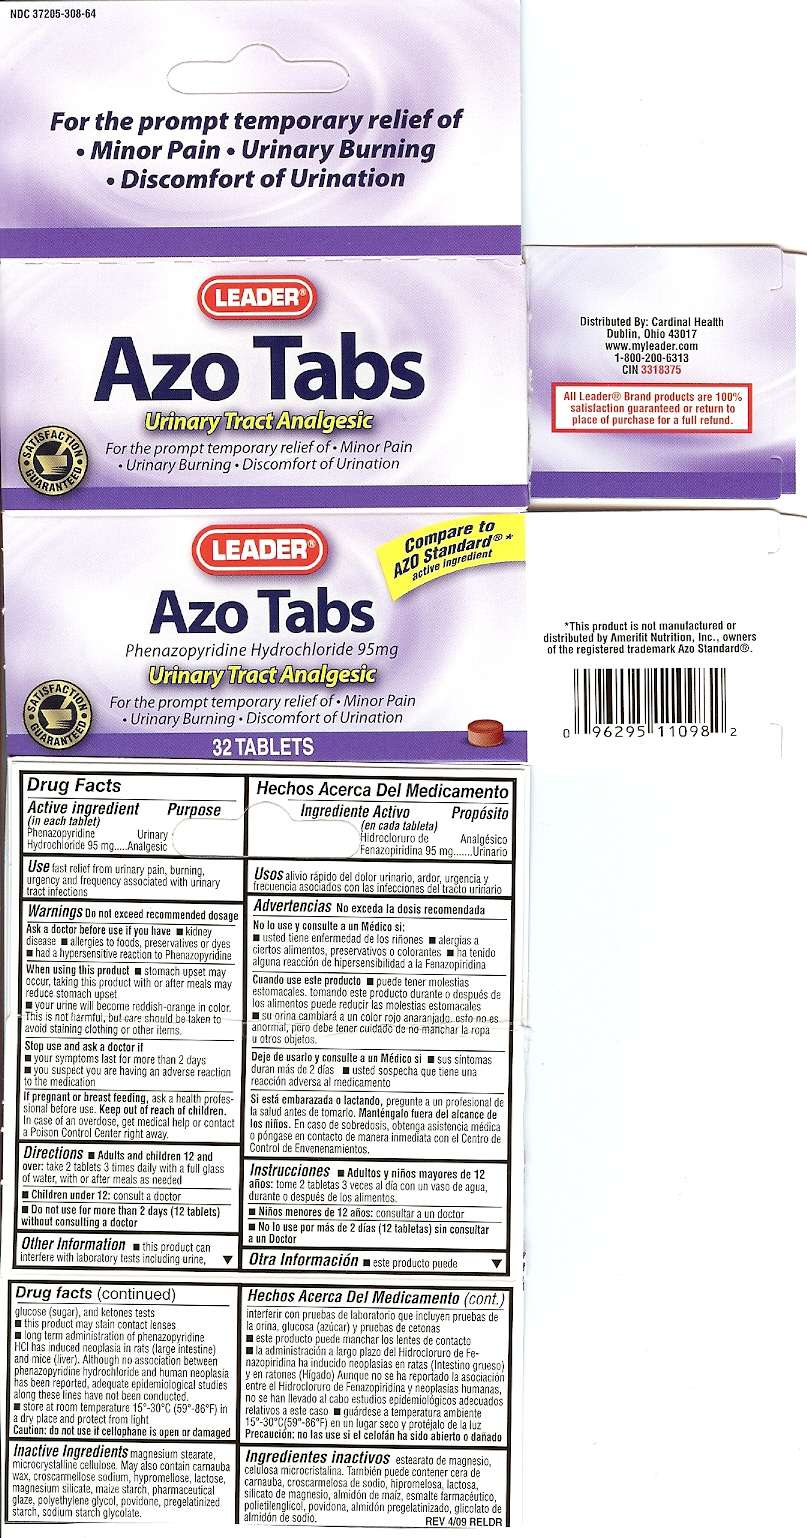 LEADER Azo Tabs Urinary Tract Analgesic